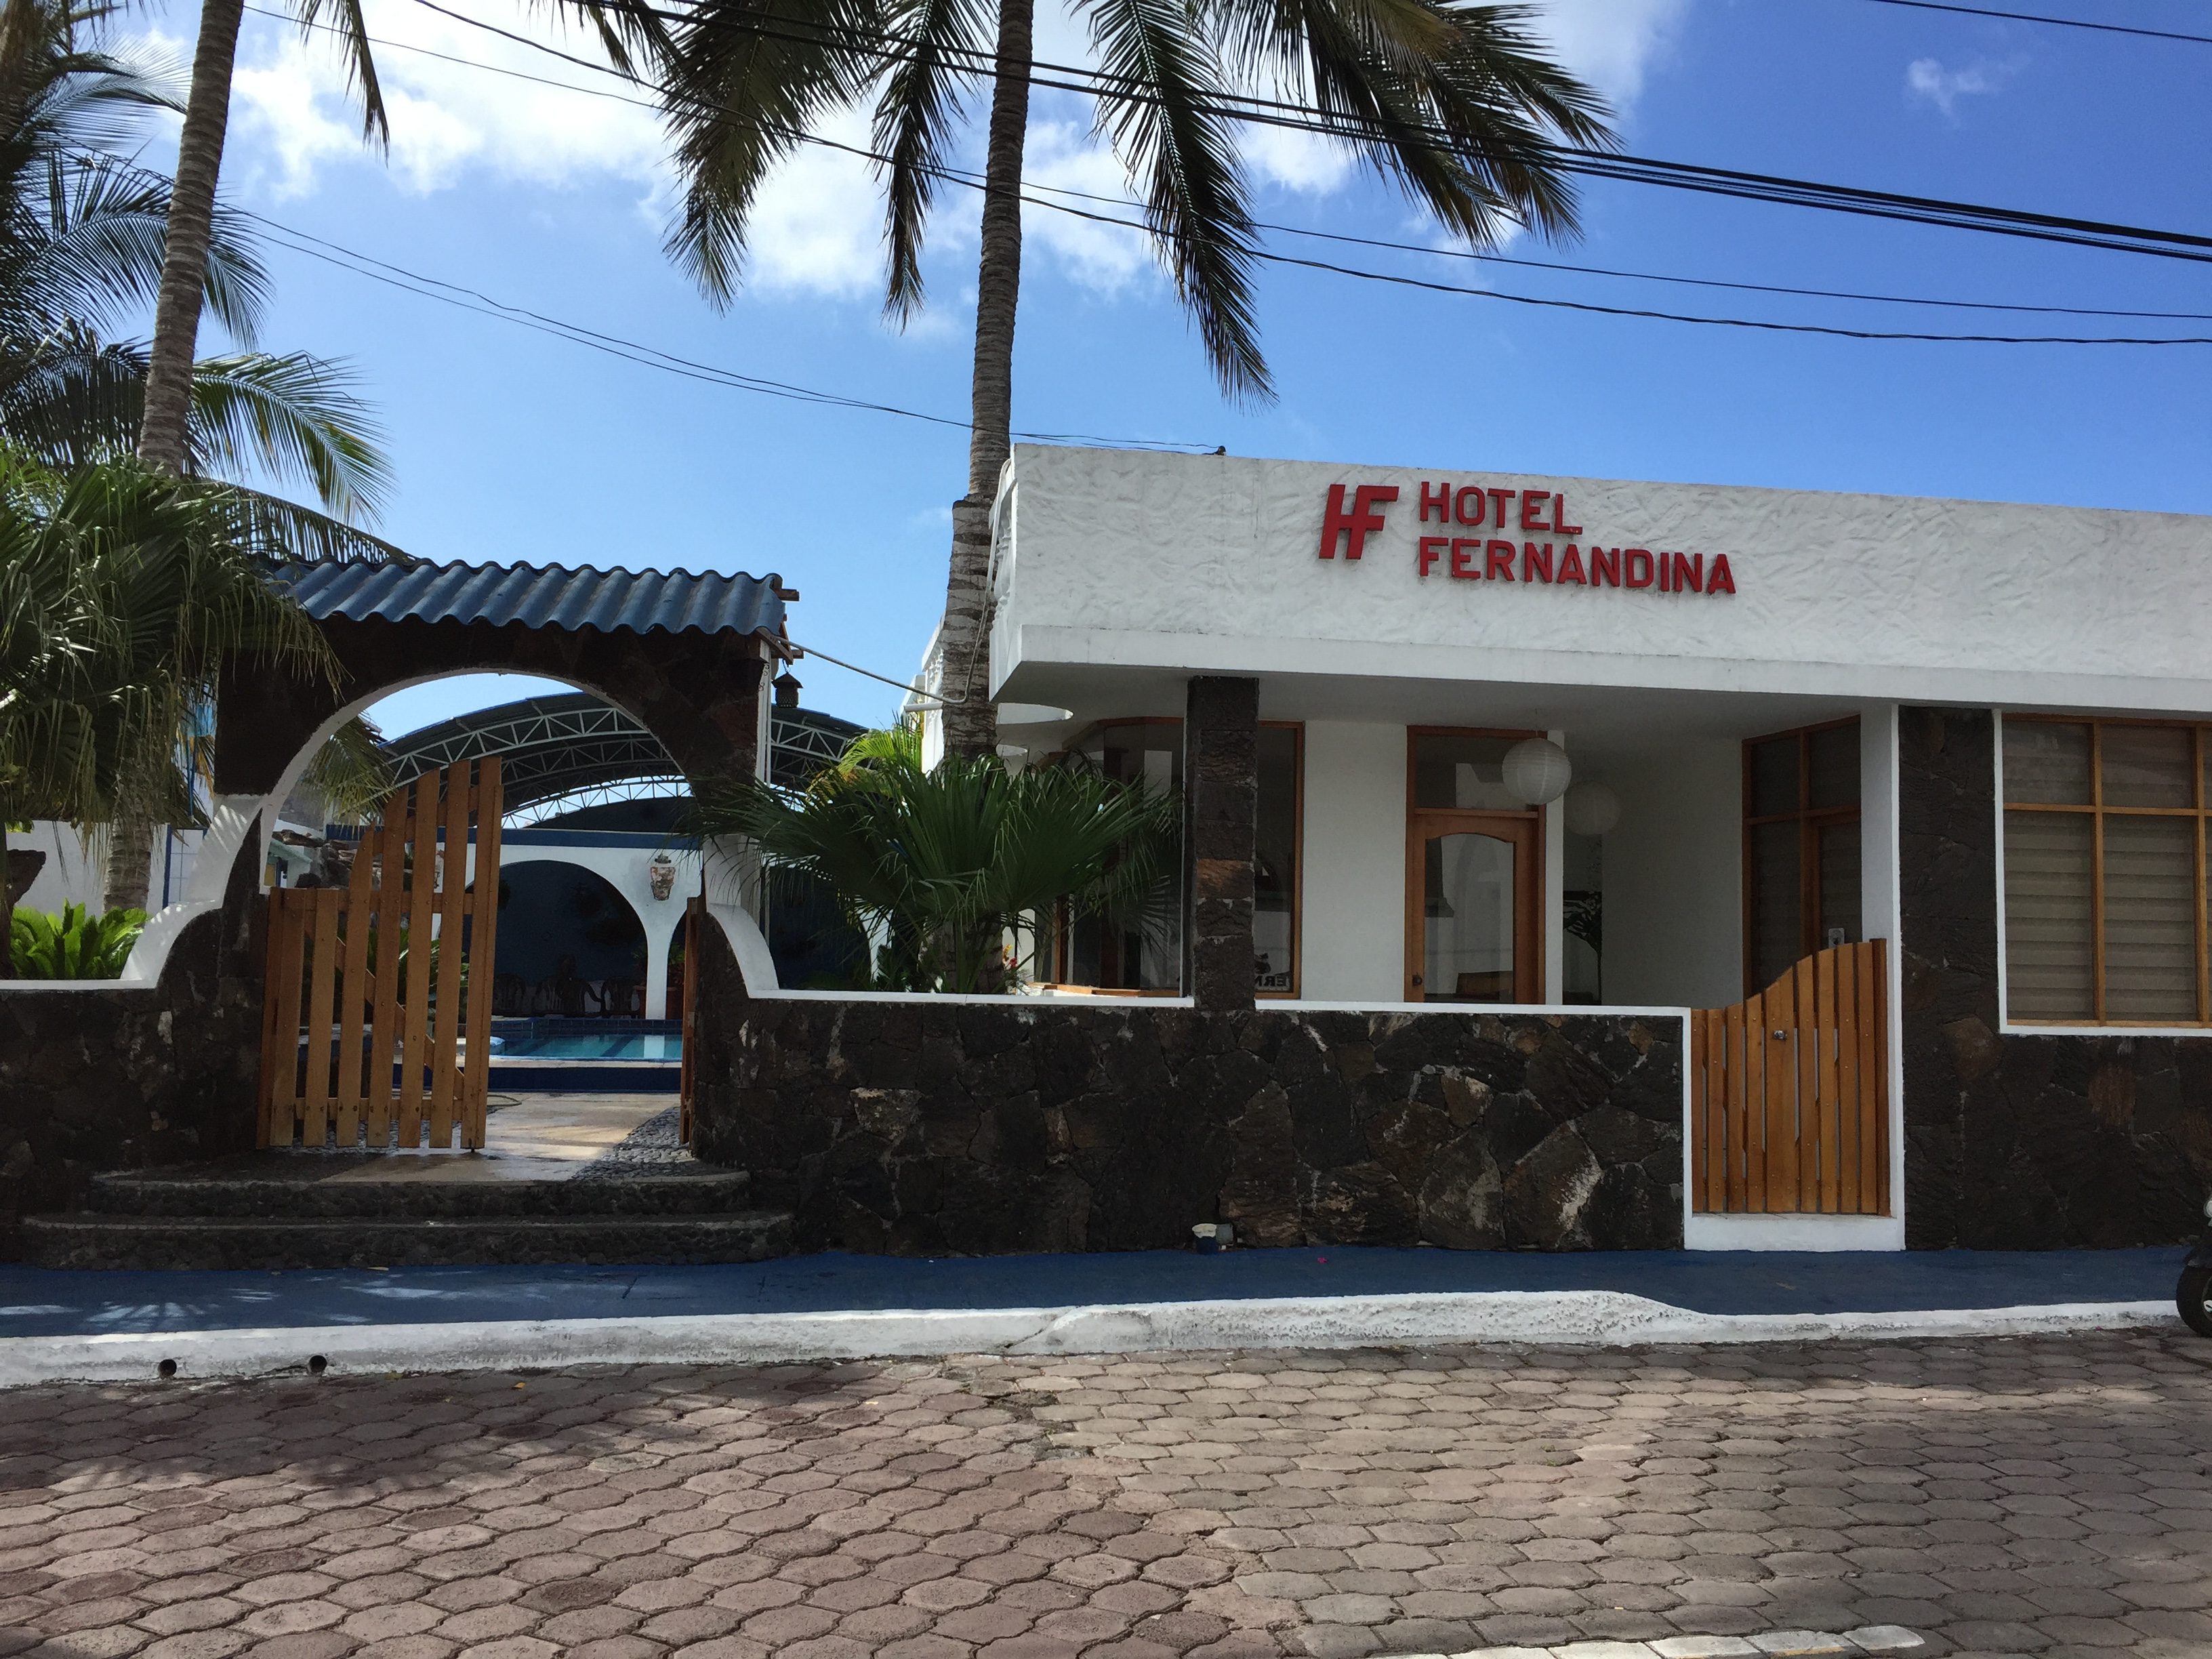 Hotel Fernandina in Puerto Ayora, Santa Cruz in the Galapagos Islands